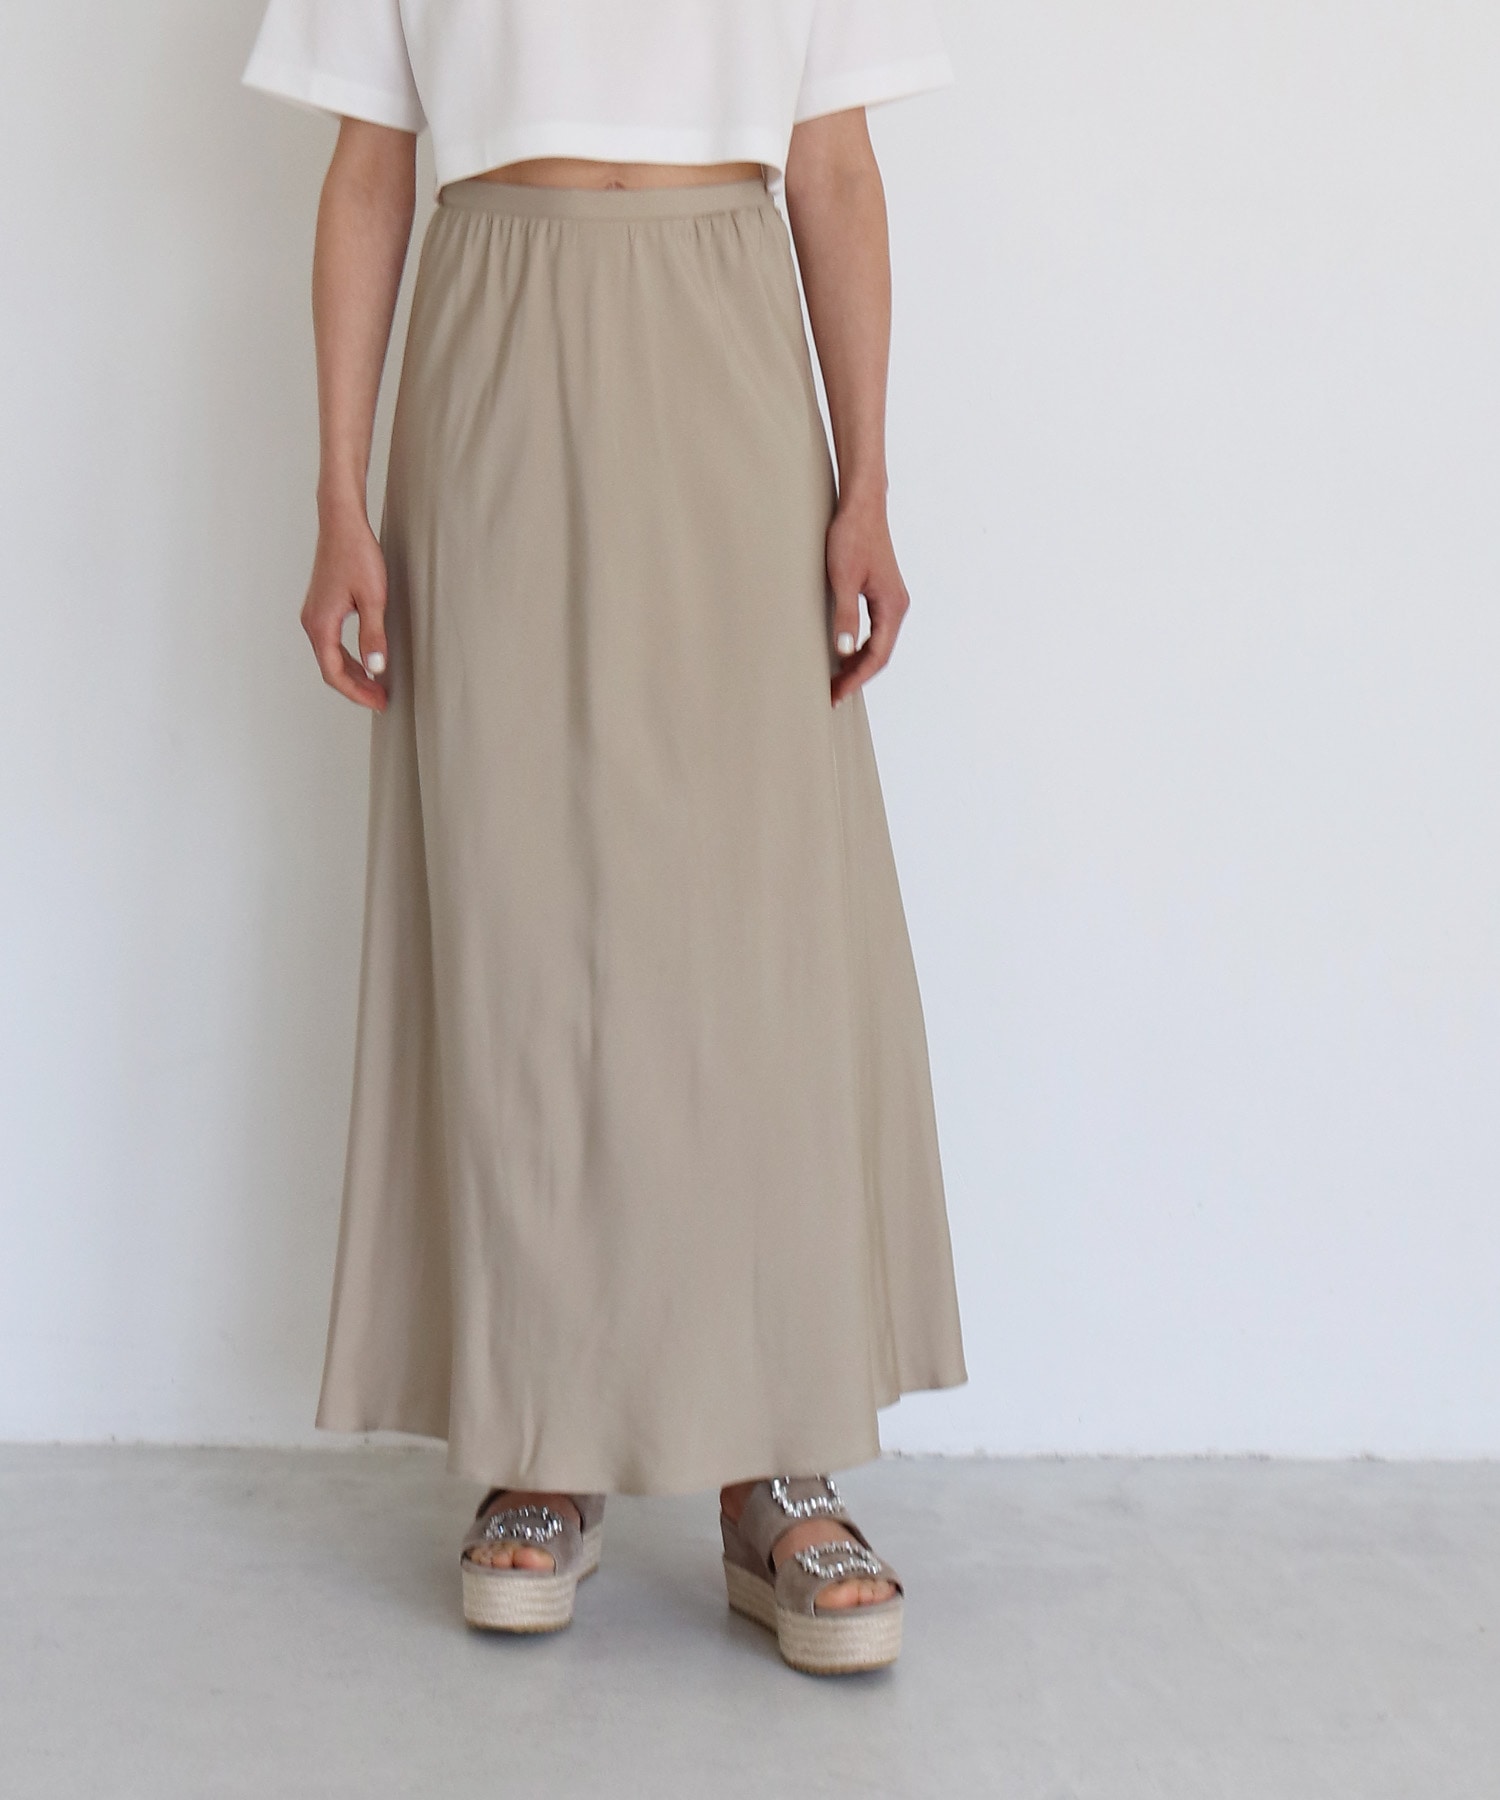 fibril chambray flare skirt